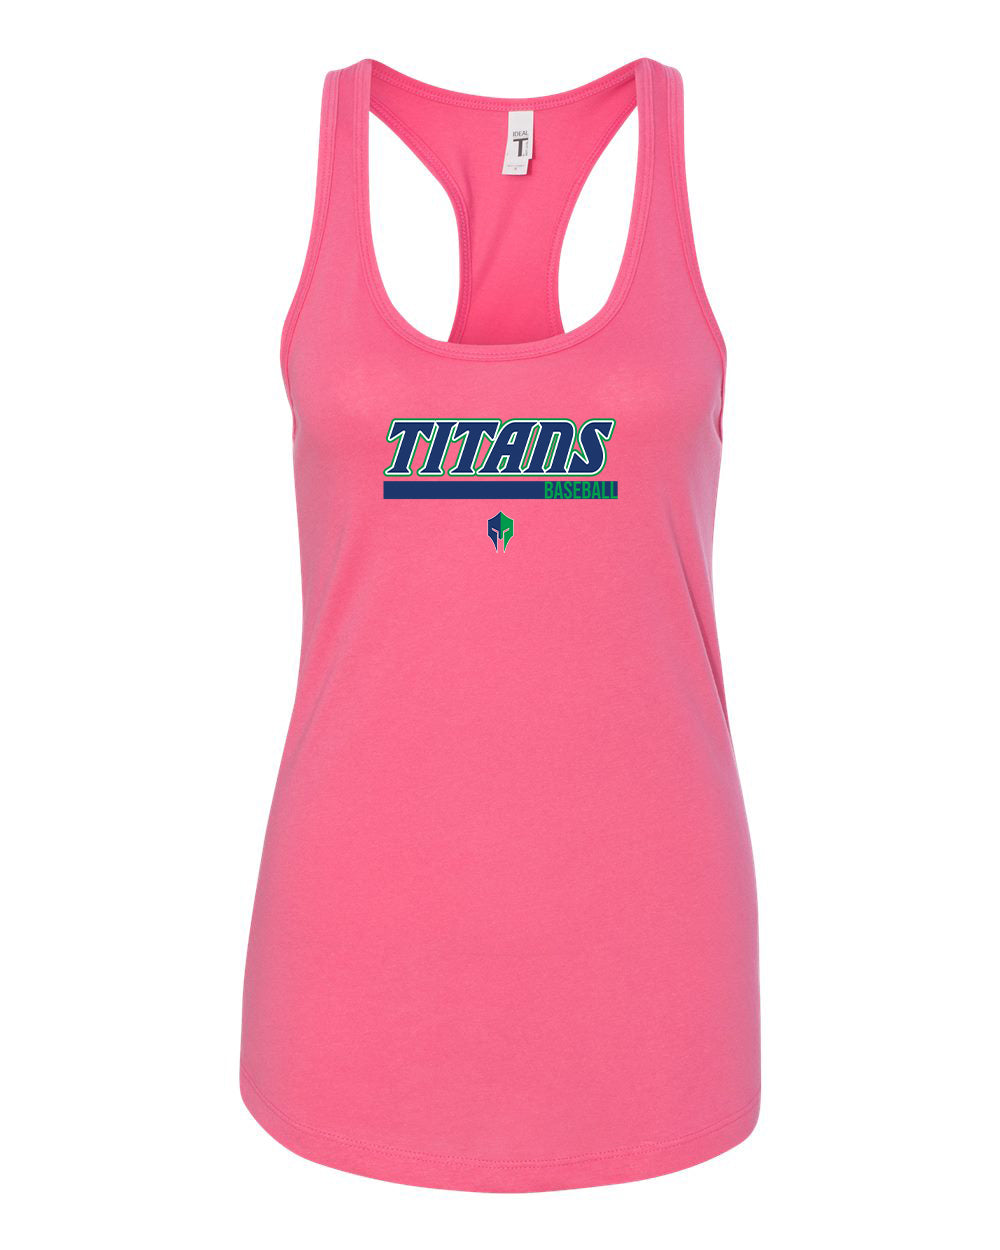 Titans Ladies Racerback Tank "Rectangle" - 1533 (color options available)